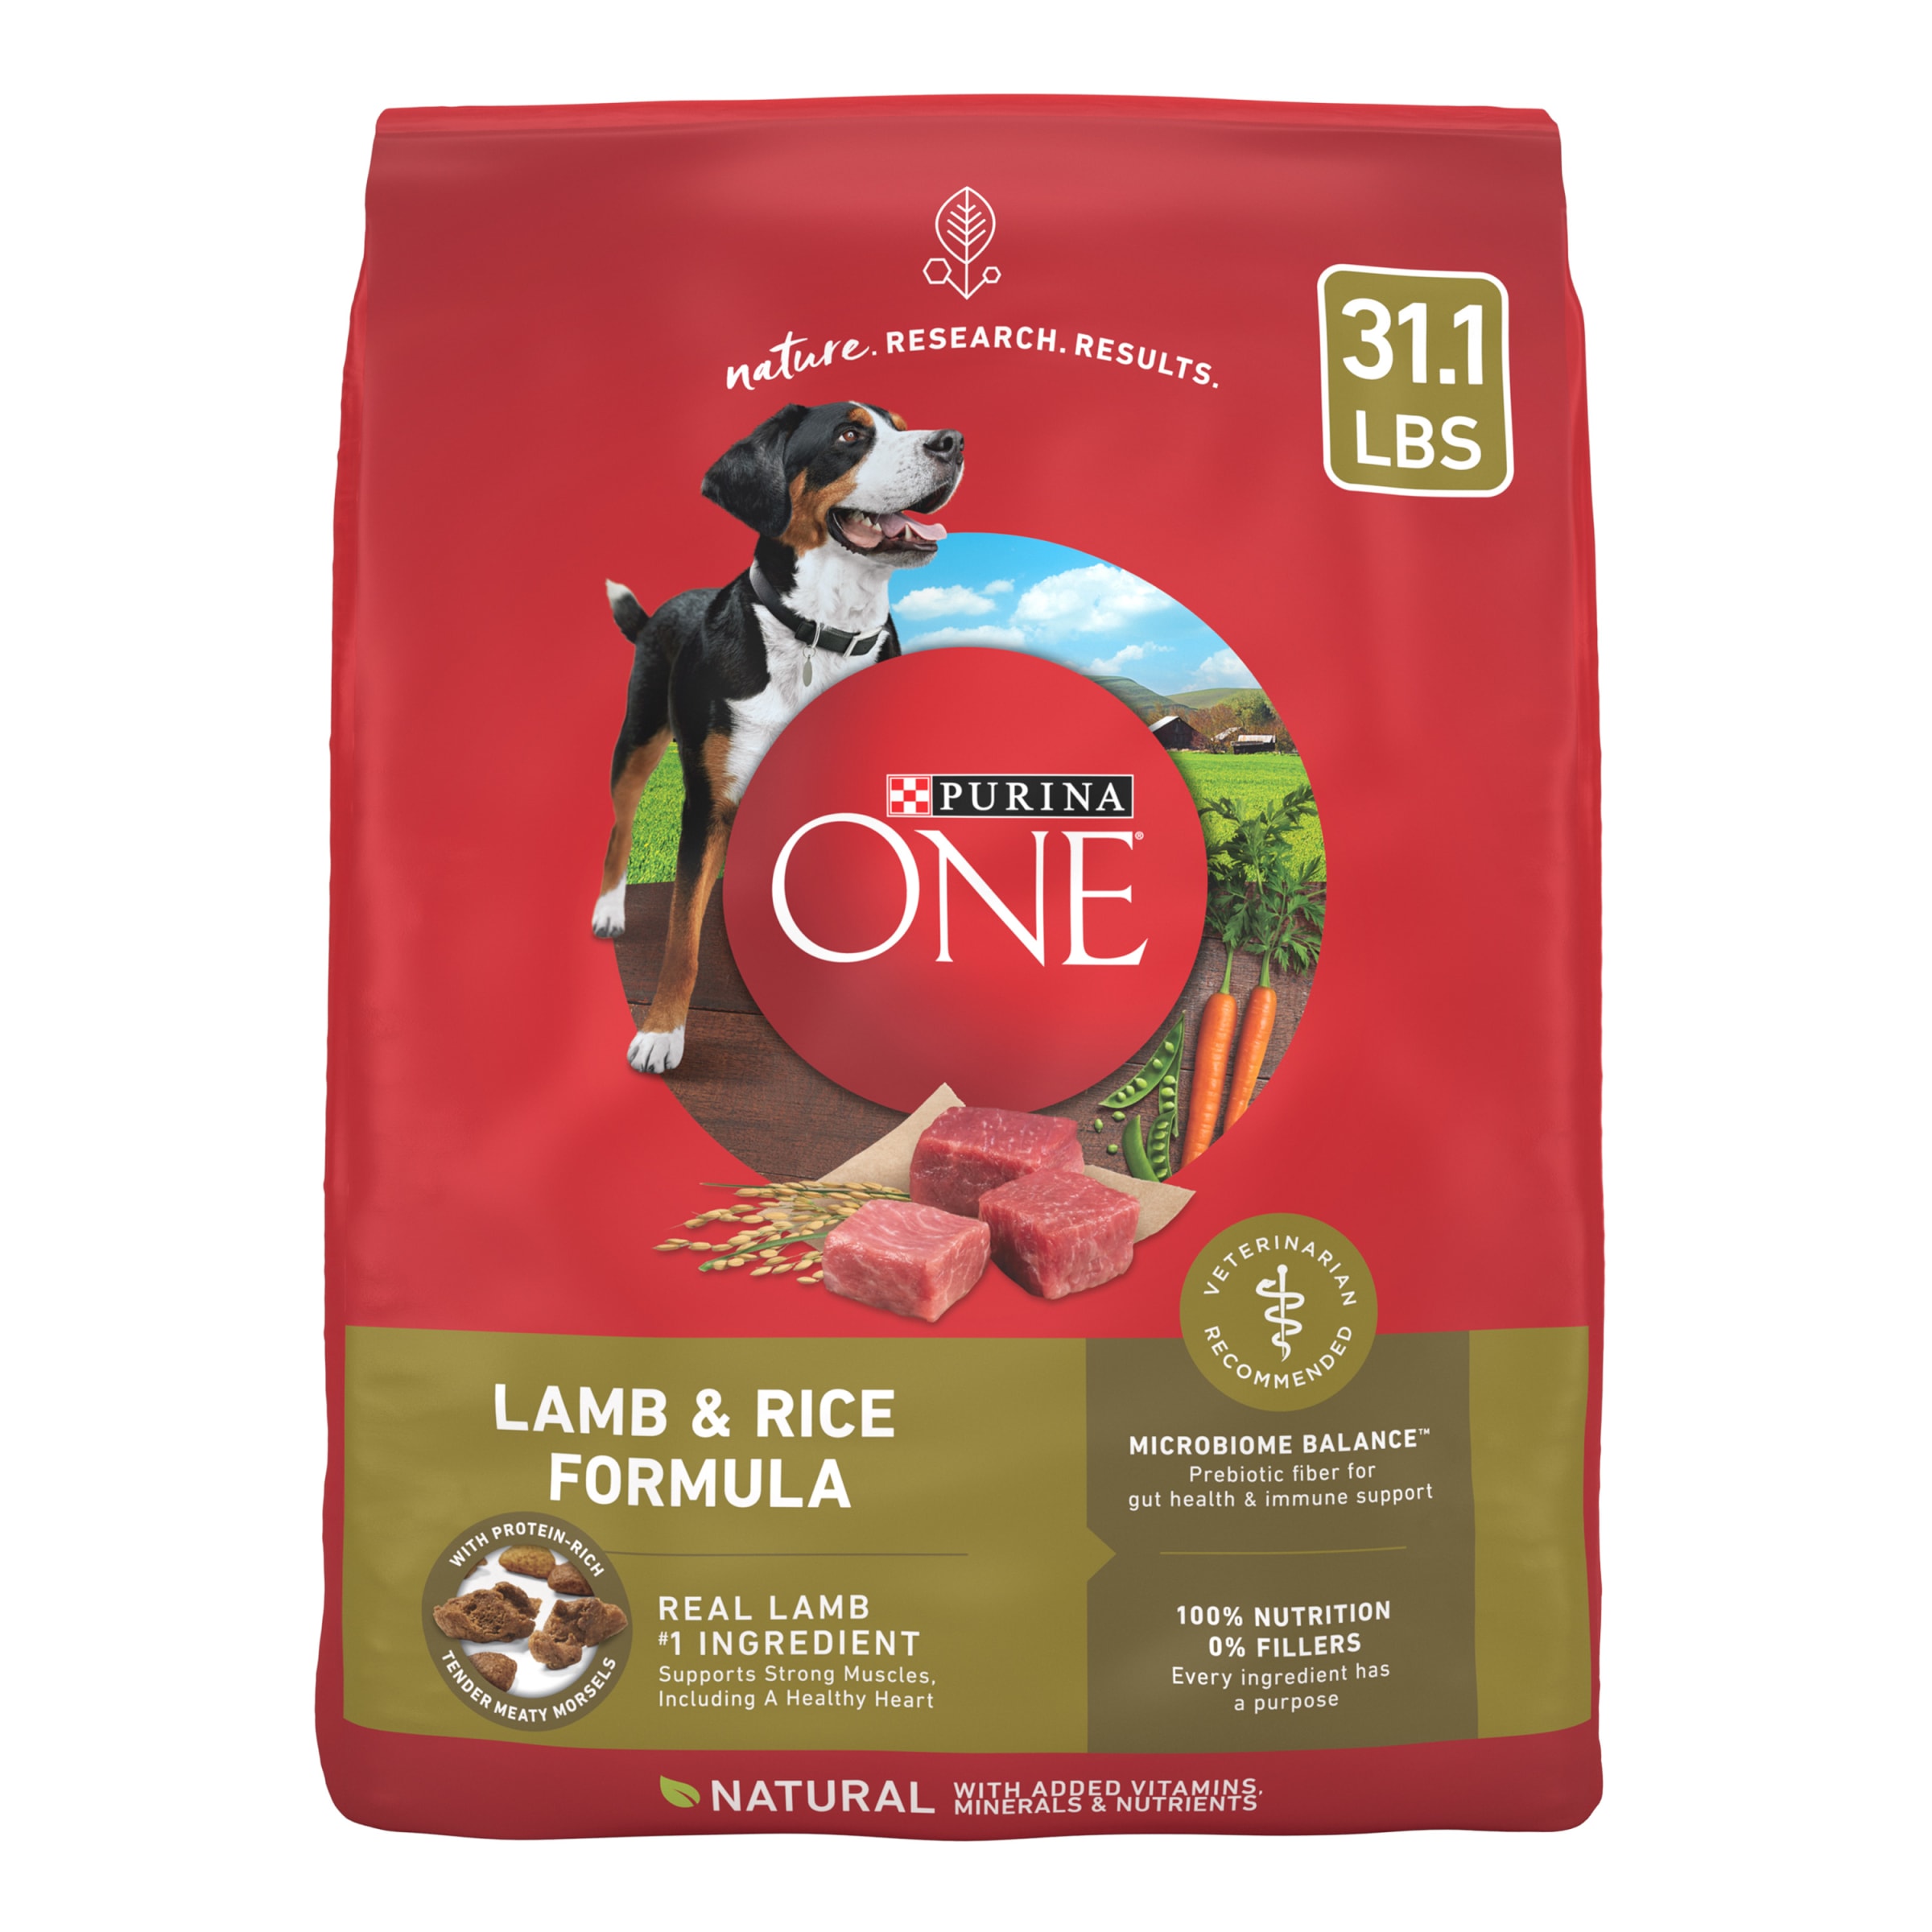 Purina One Dry Dog Food High Protein Microbiome Balance,, Real Lamb & Rice, 31.1 lb Bag - image 1 of 11